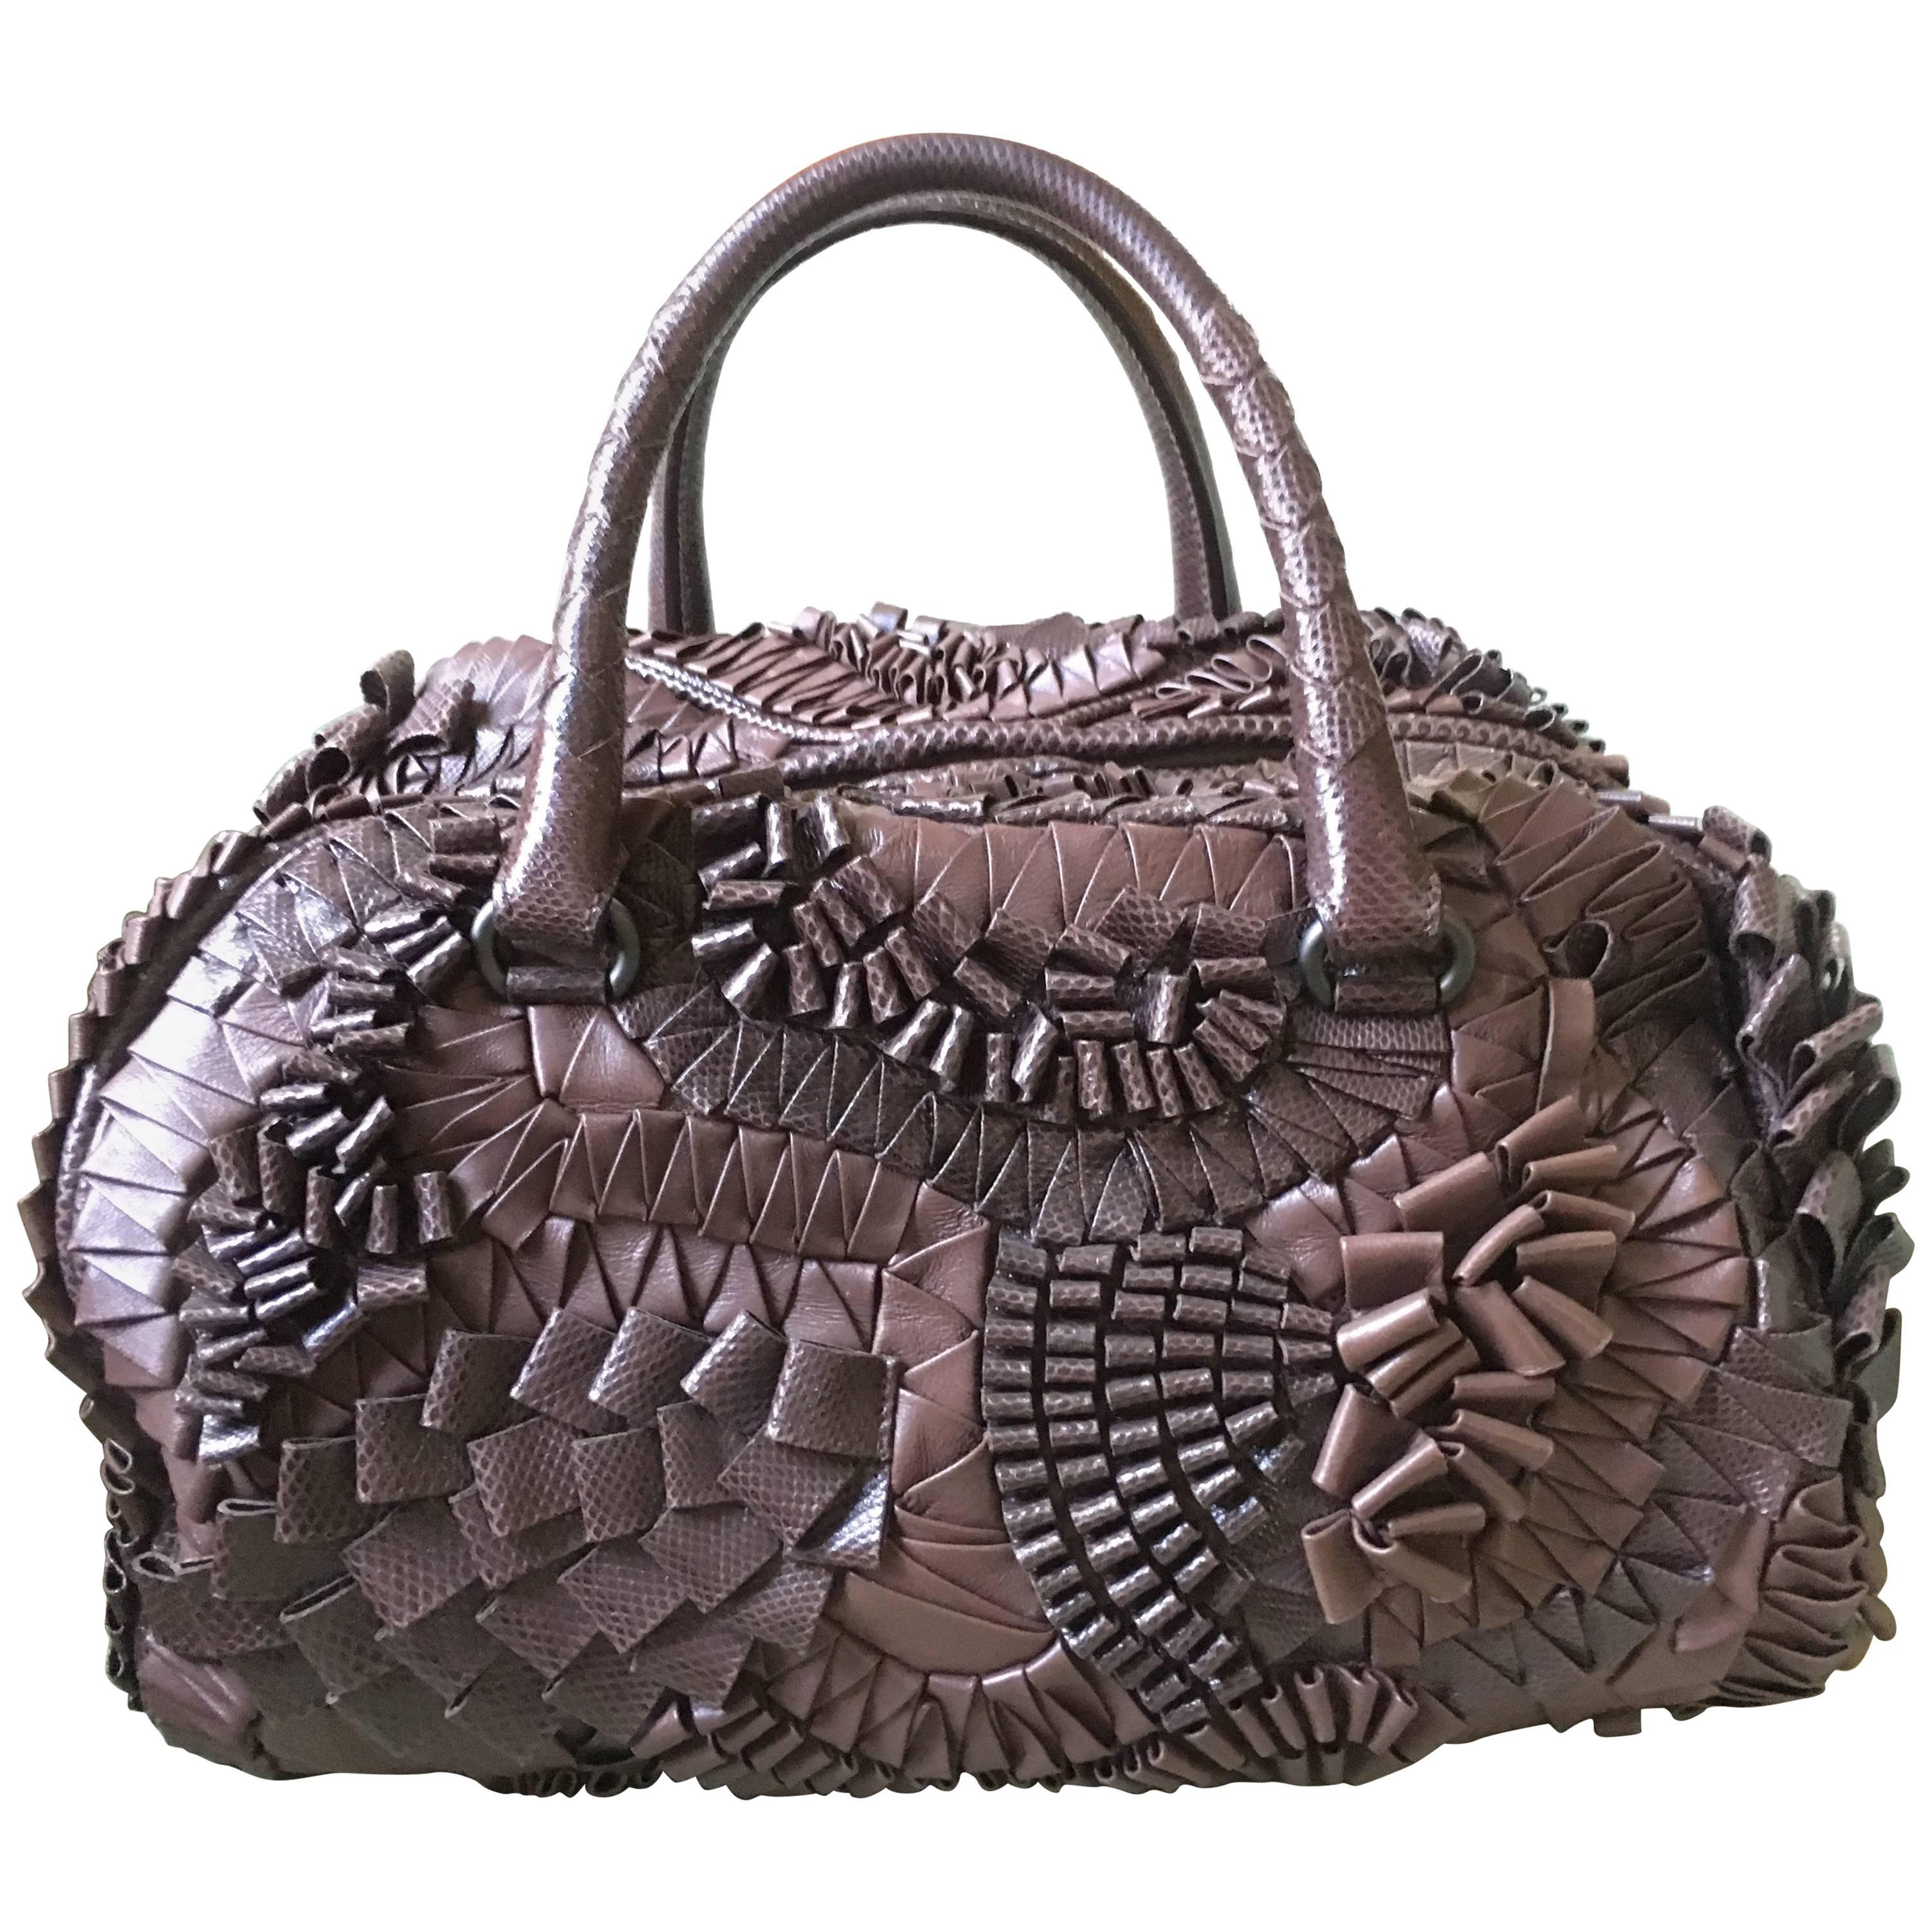 Bottega Veneta Rare Limited Edition Aubergine Woven Leather and Lizard Bag For Sale